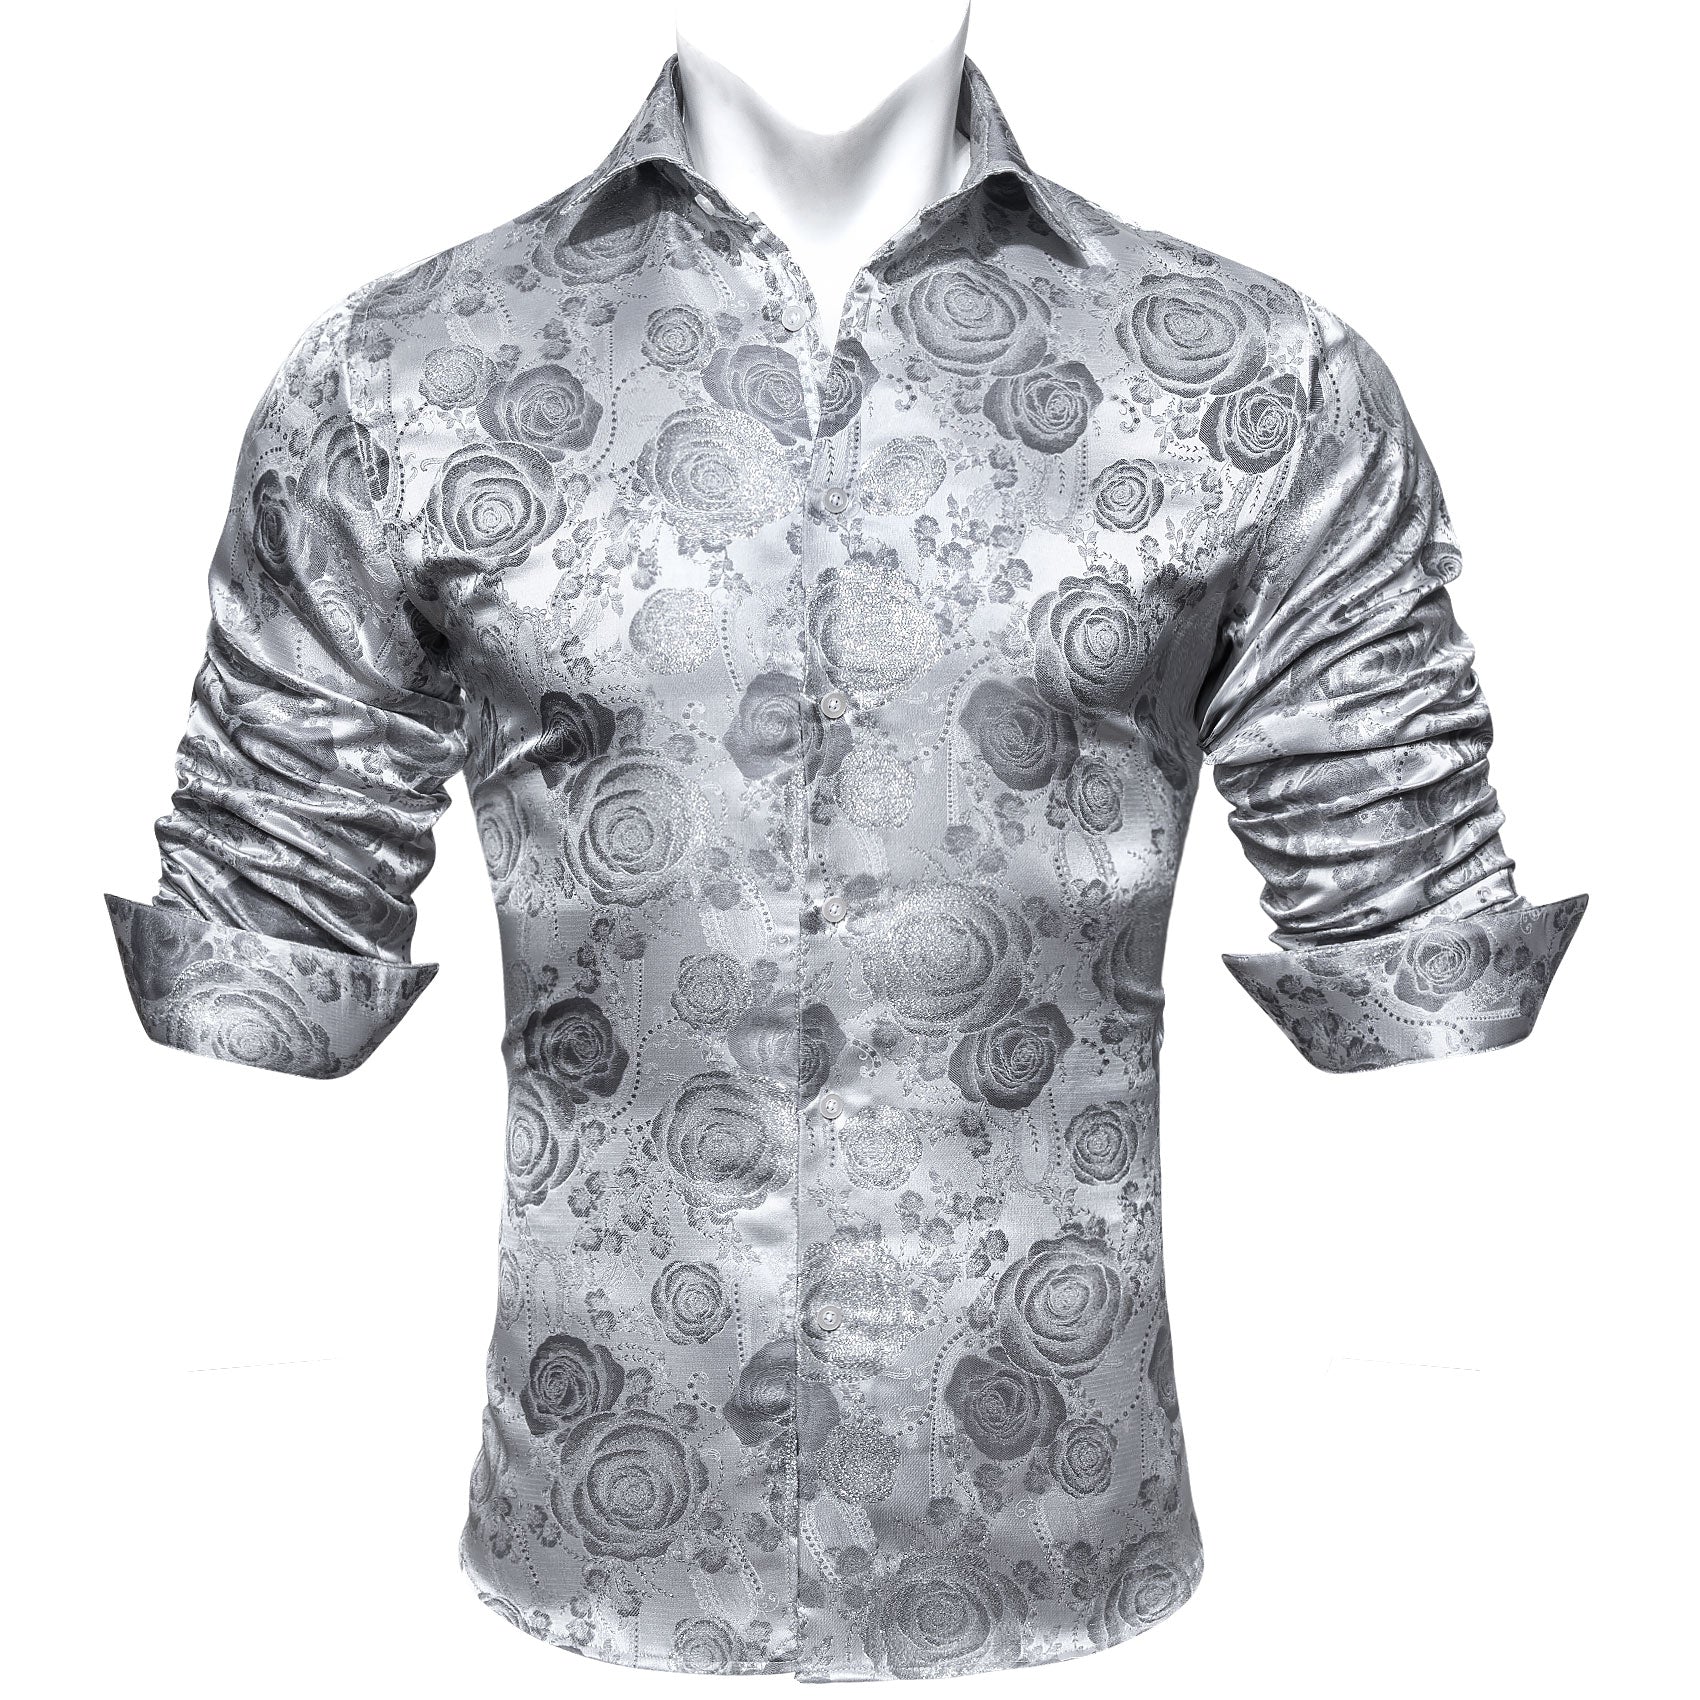 Barry.wang Button Down Shirt Silver Flower Men's Silk Long Sleeve Shirt New Fashion